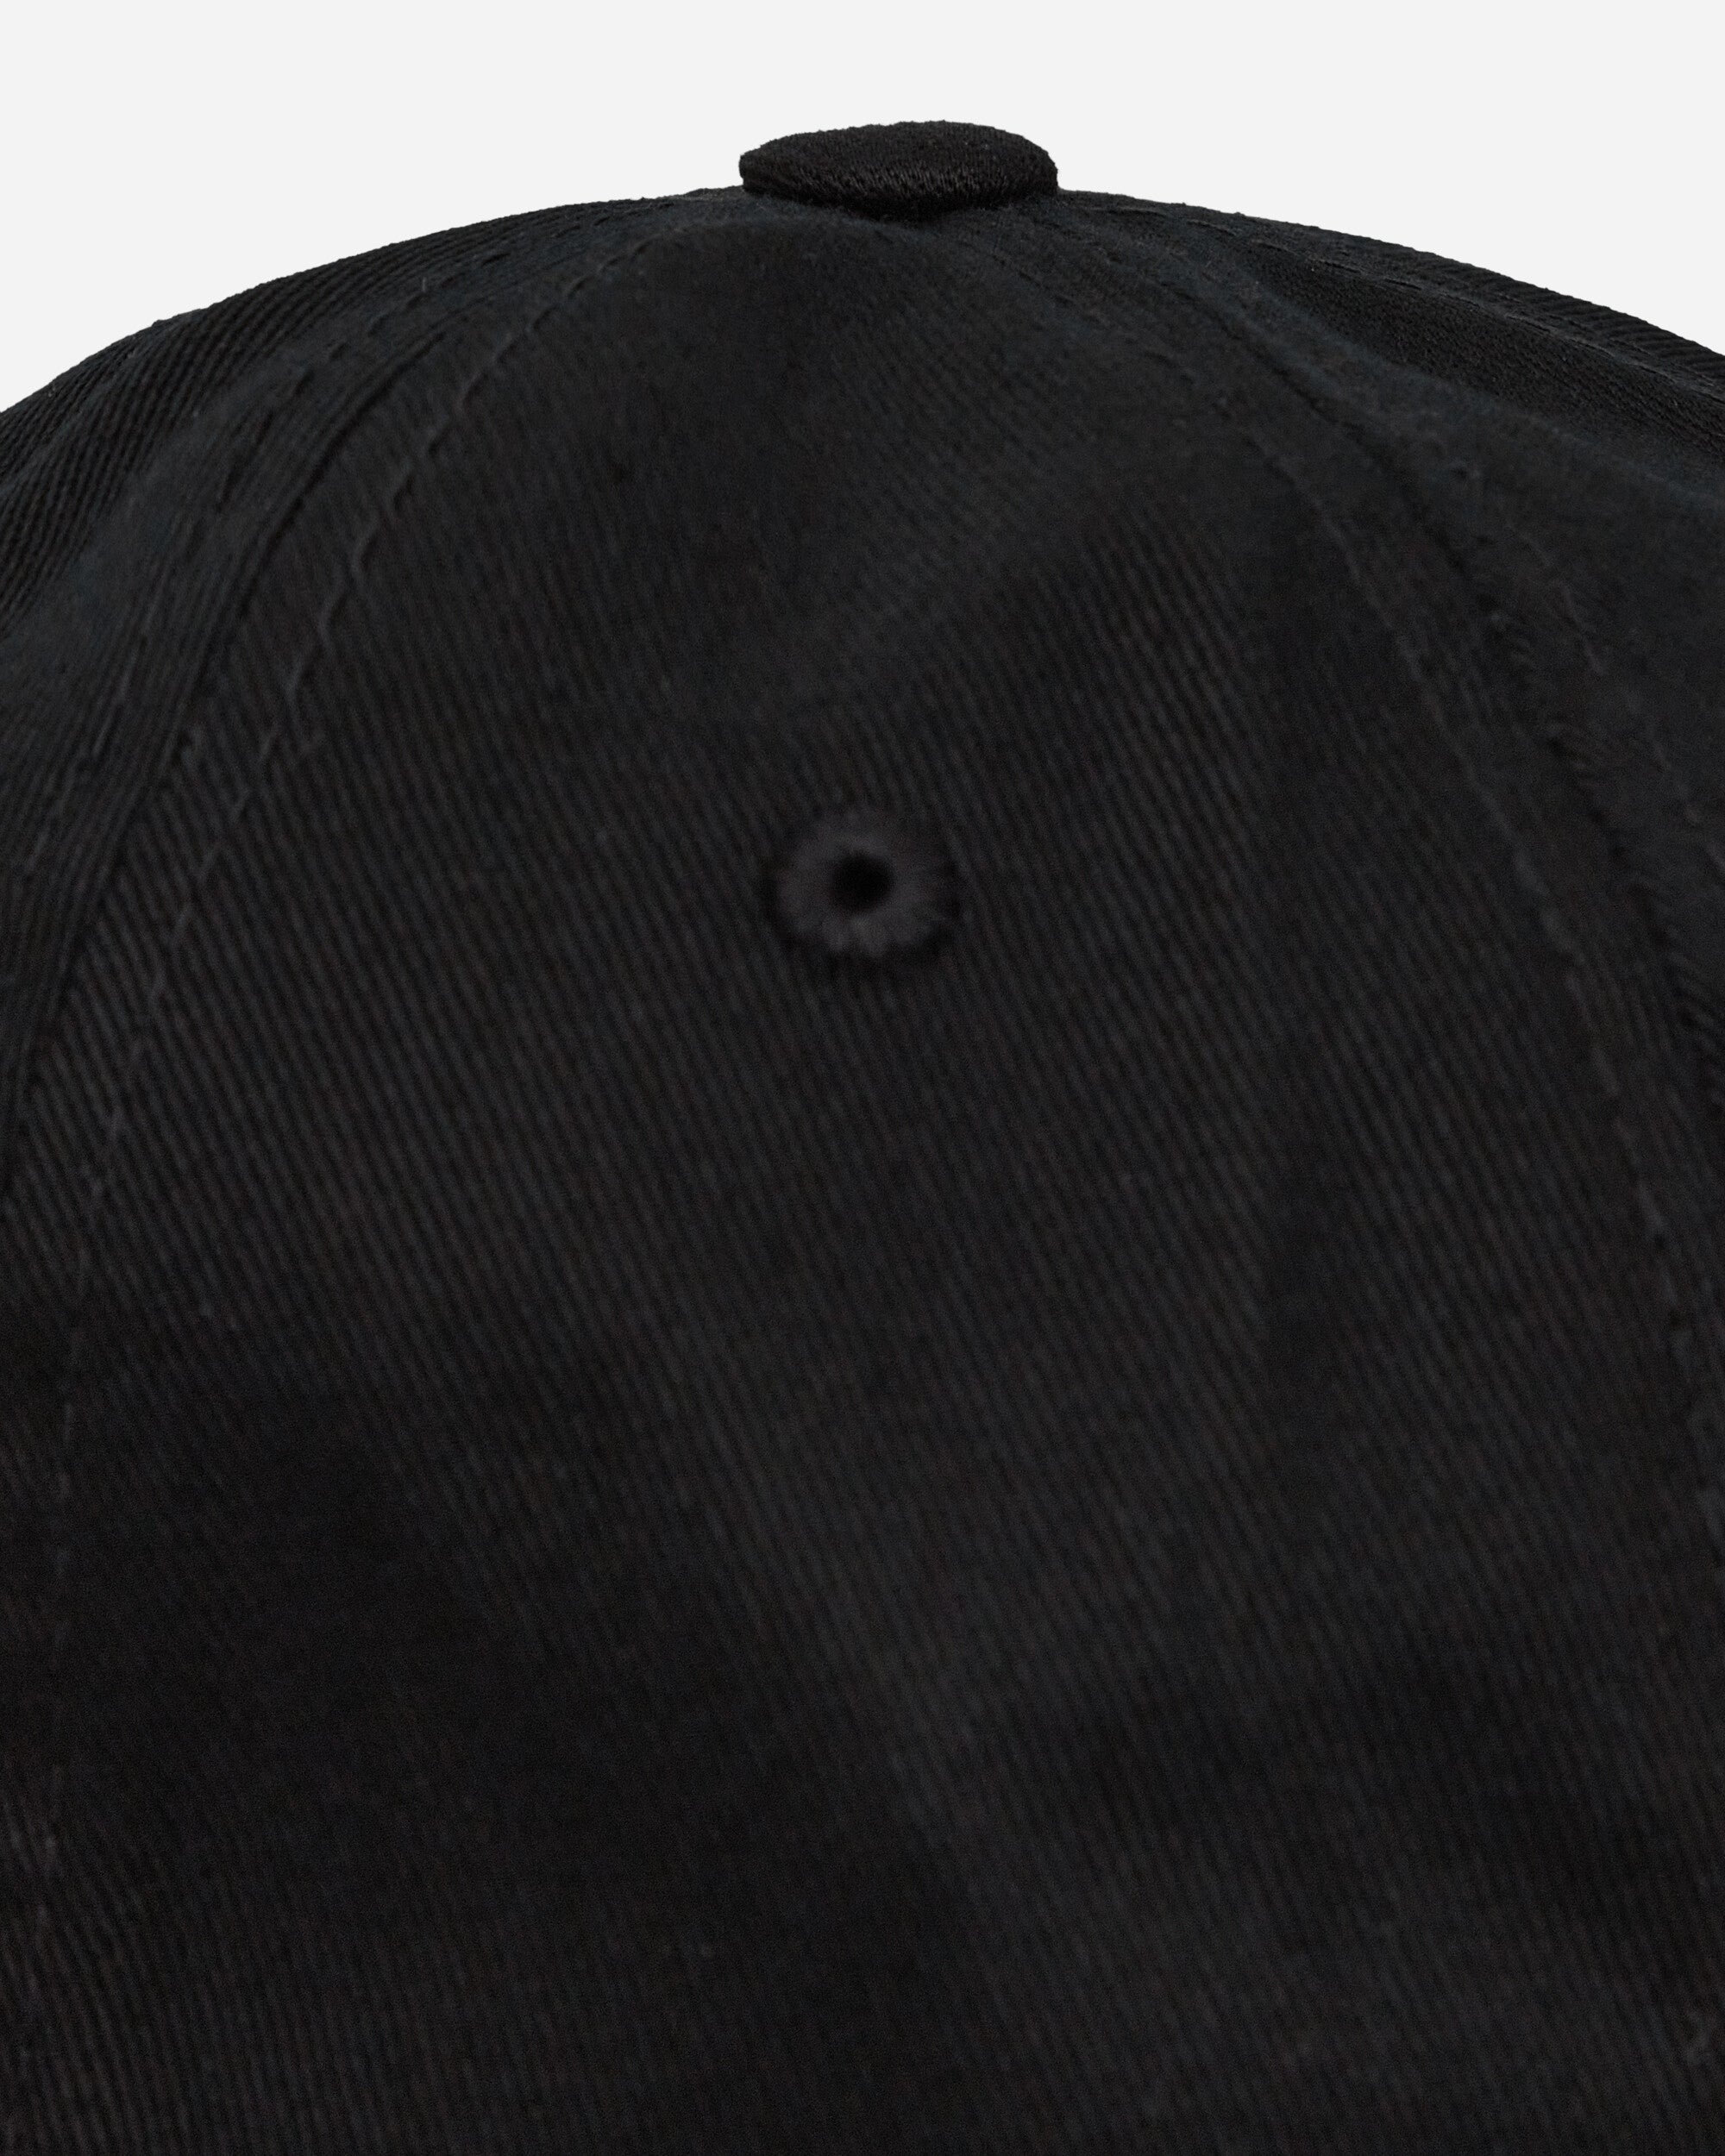 Stüssy 3 Star Low Pro Strapback Cap Black Hats Caps 1311140 0001